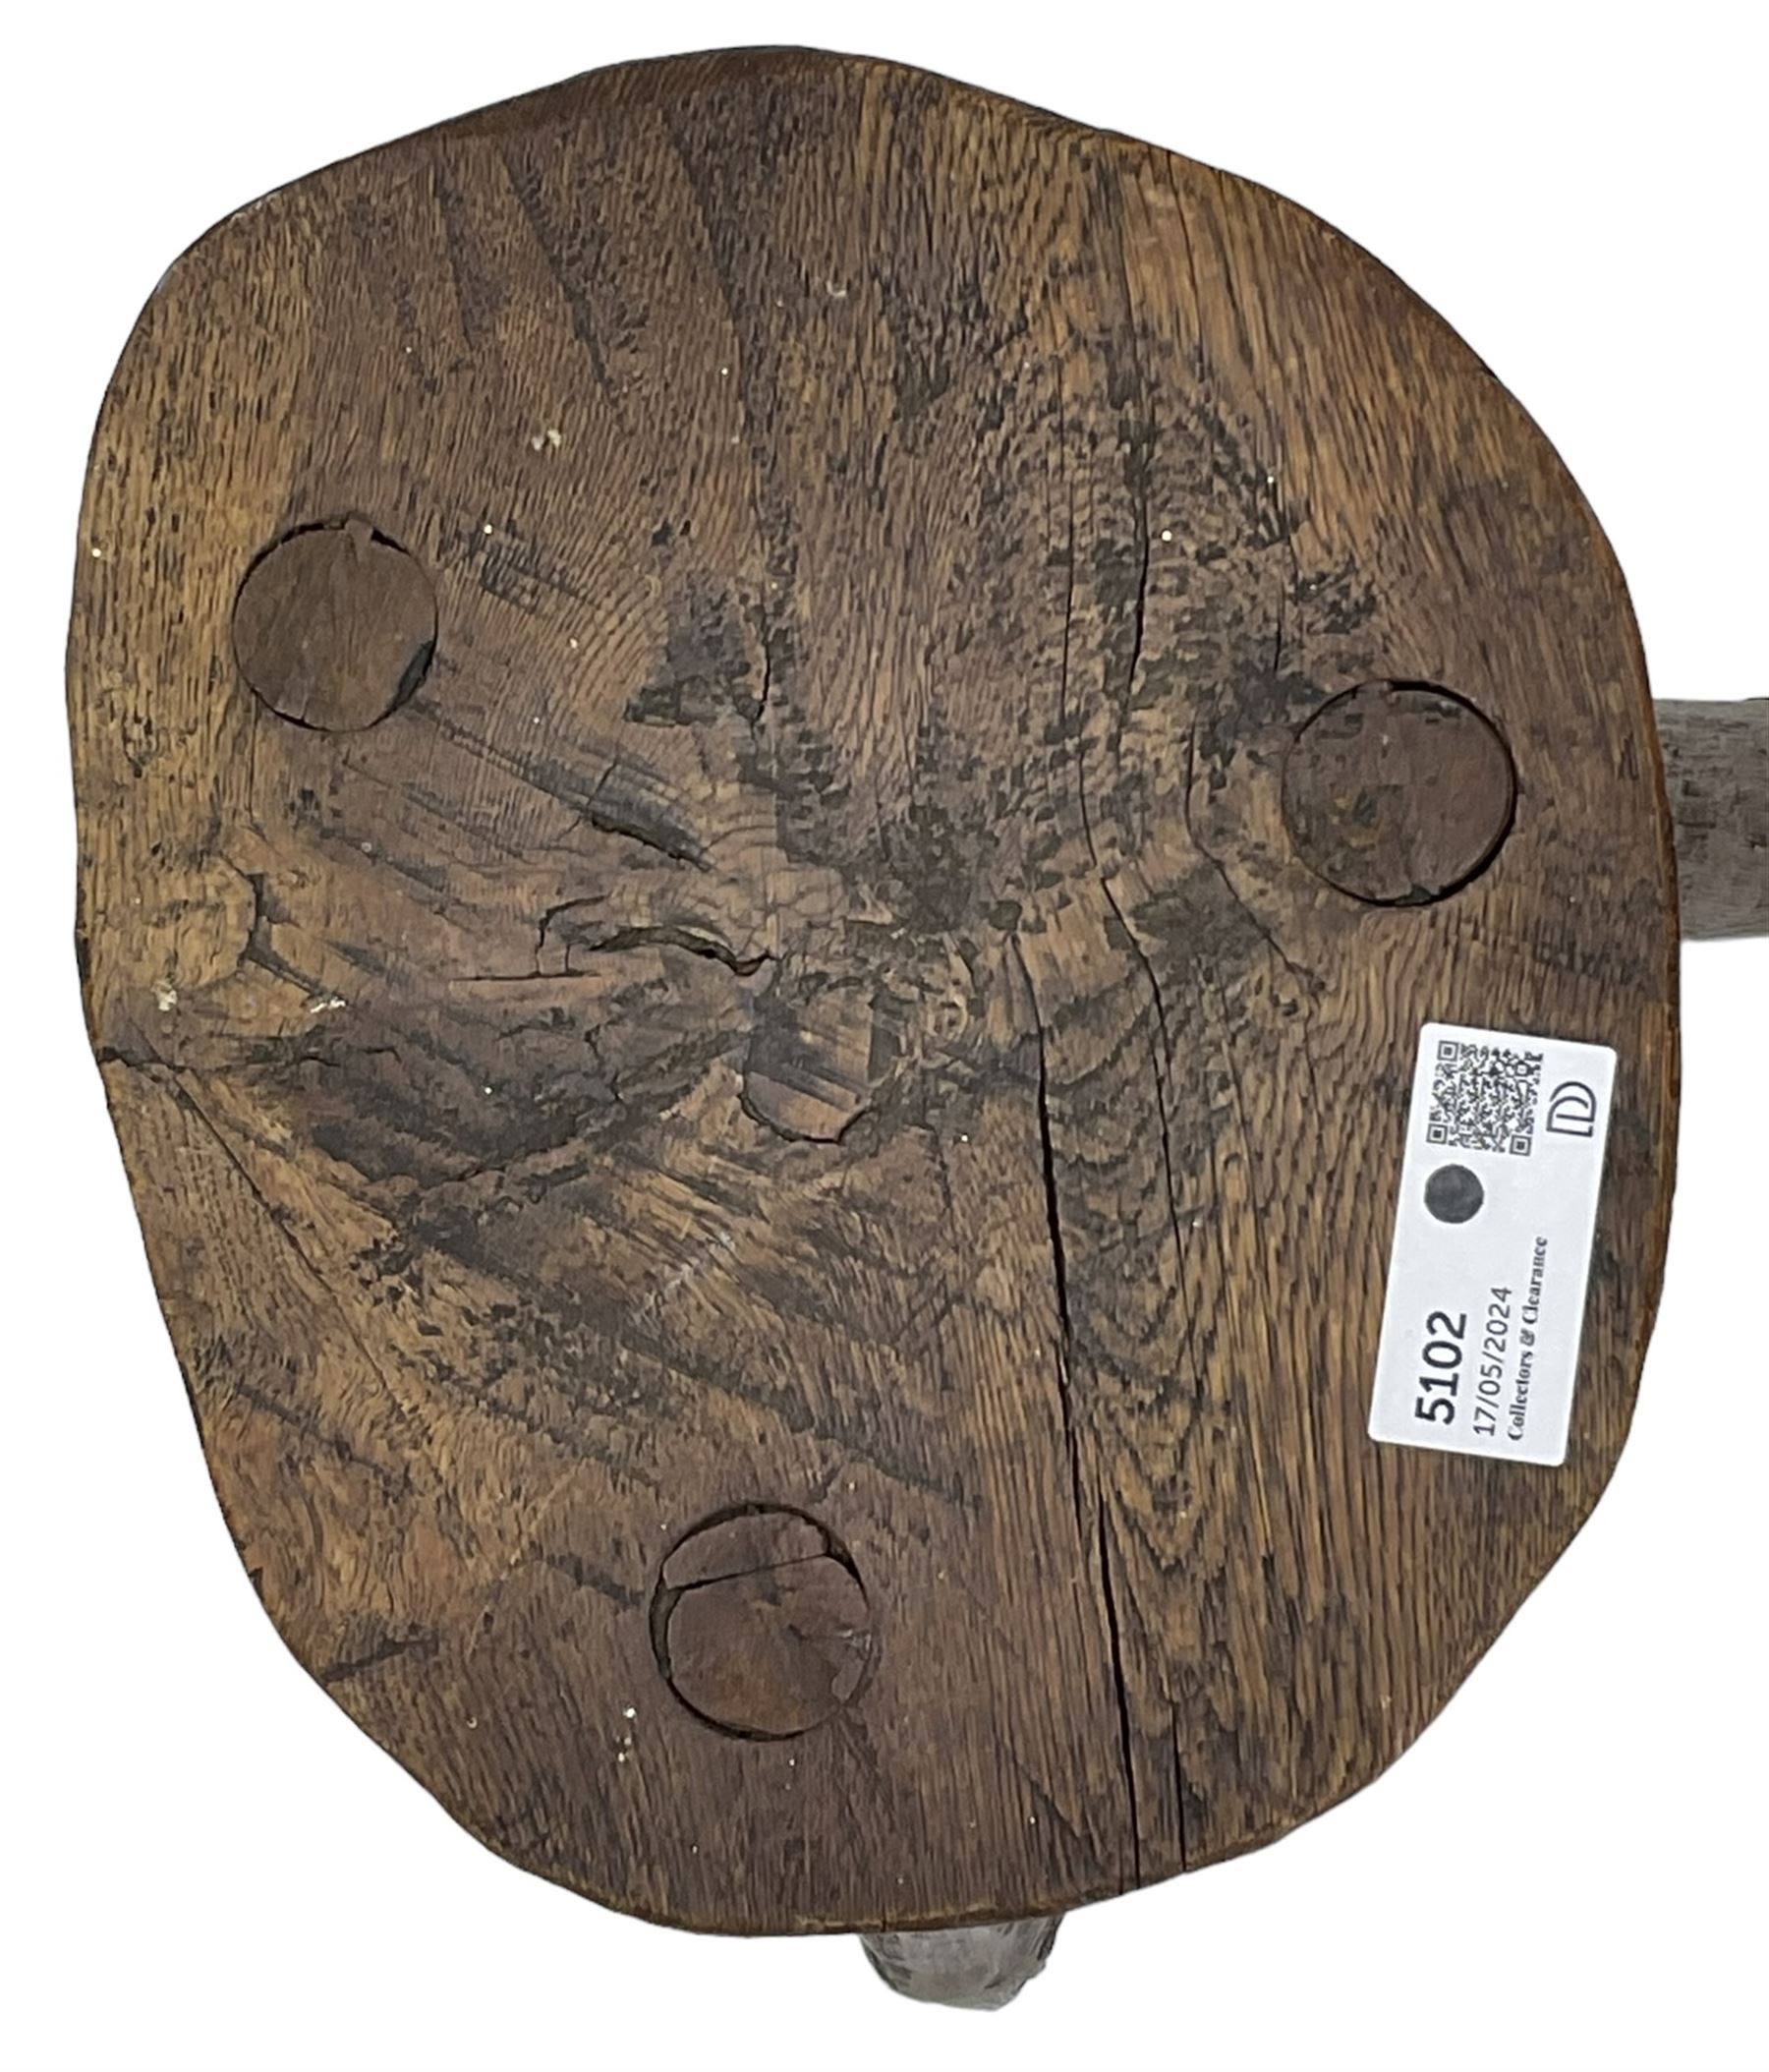 Rustic oak three-legged stool - Image 4 of 5